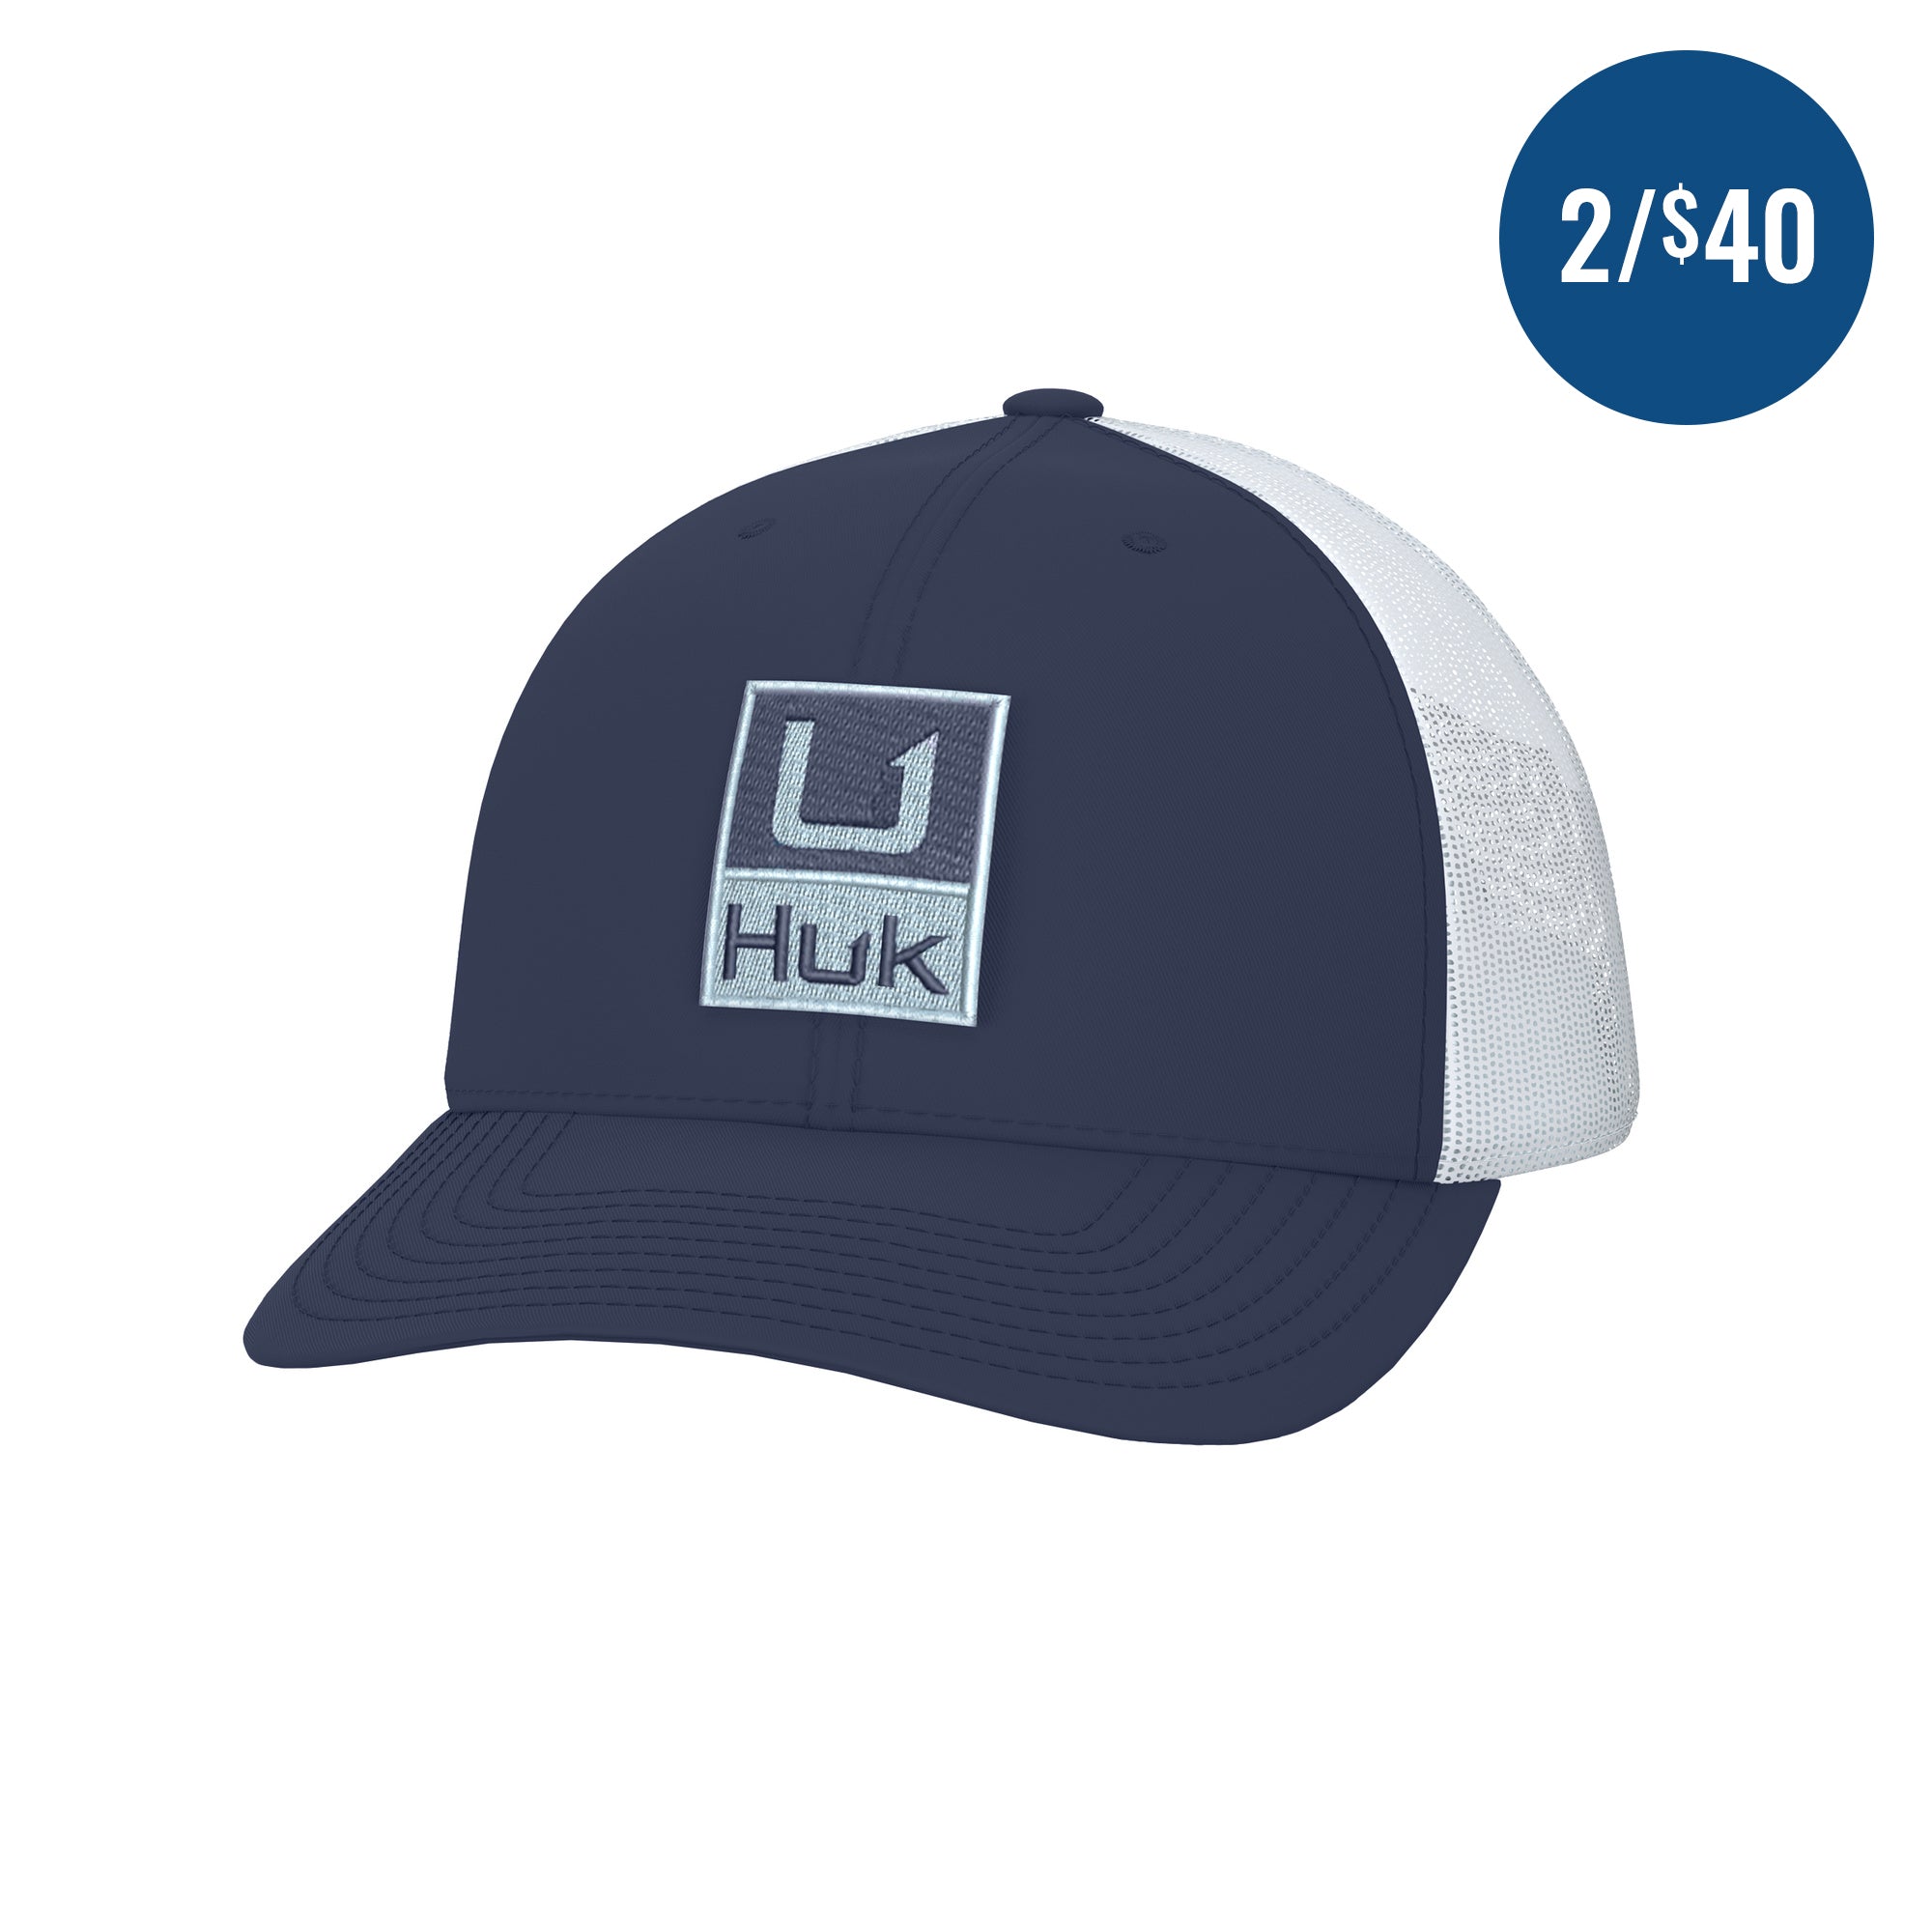 Huk'D Up Kids Trucker Hat